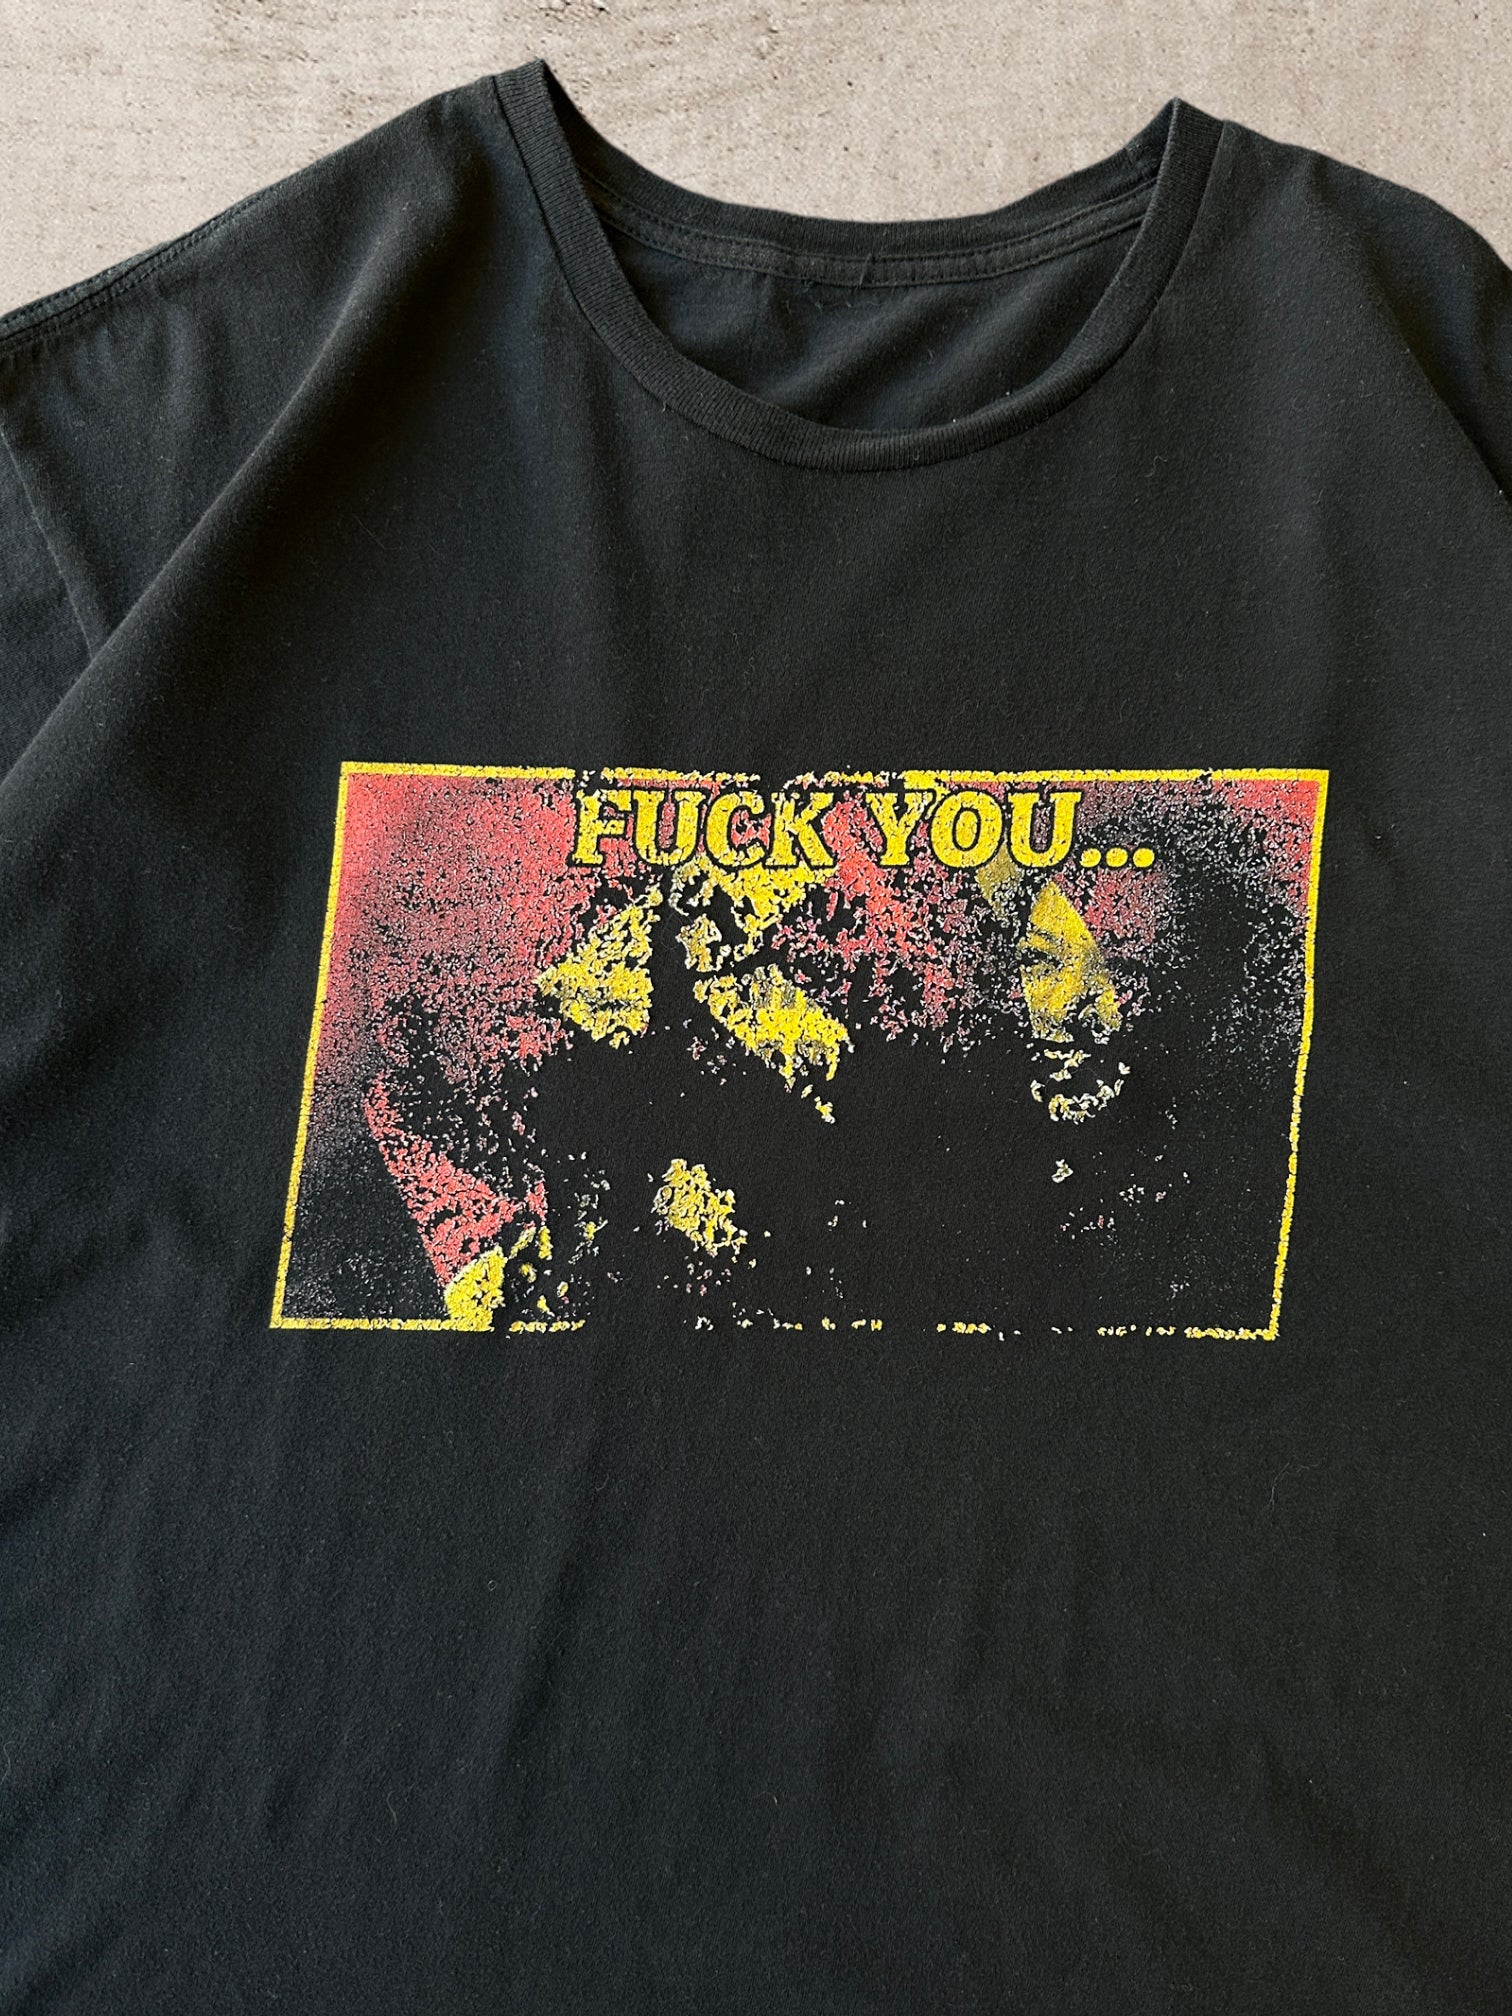 Vintage F**k You Shirt - XL